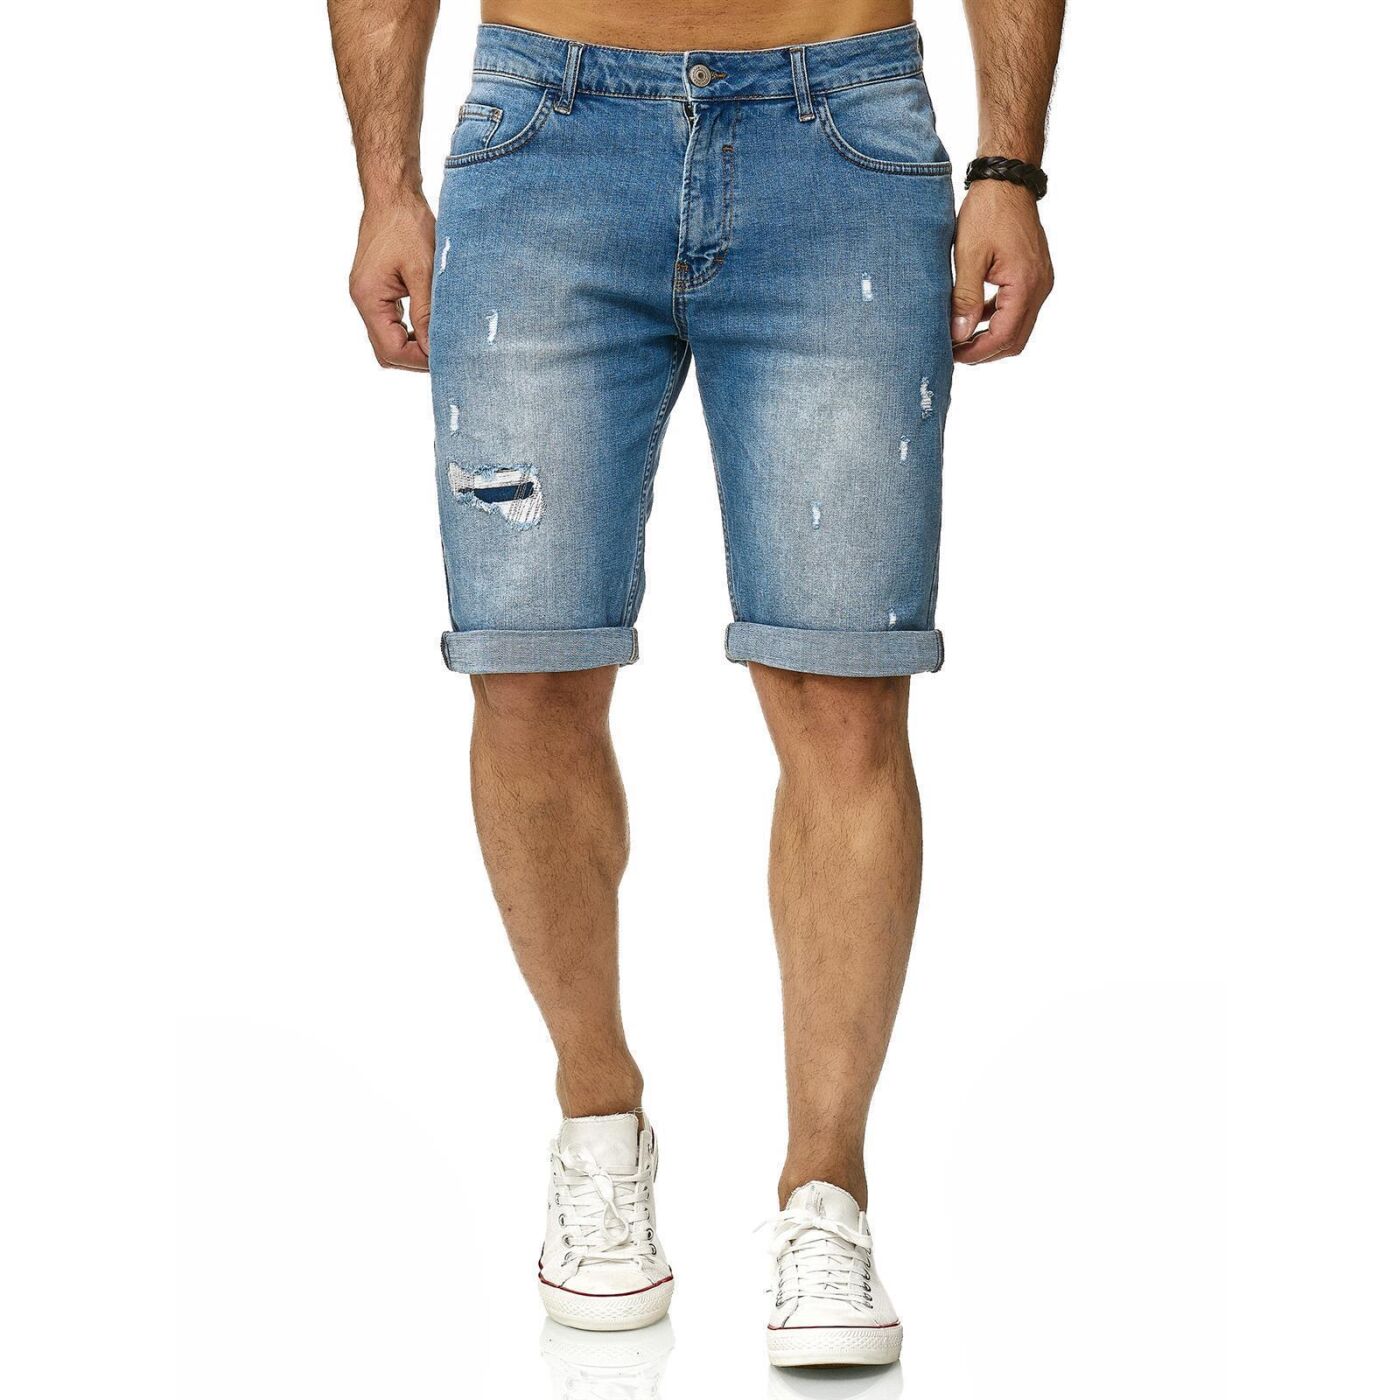 Mode Jeansshorts Kurze Hosen Hotpants \/ Shorts 